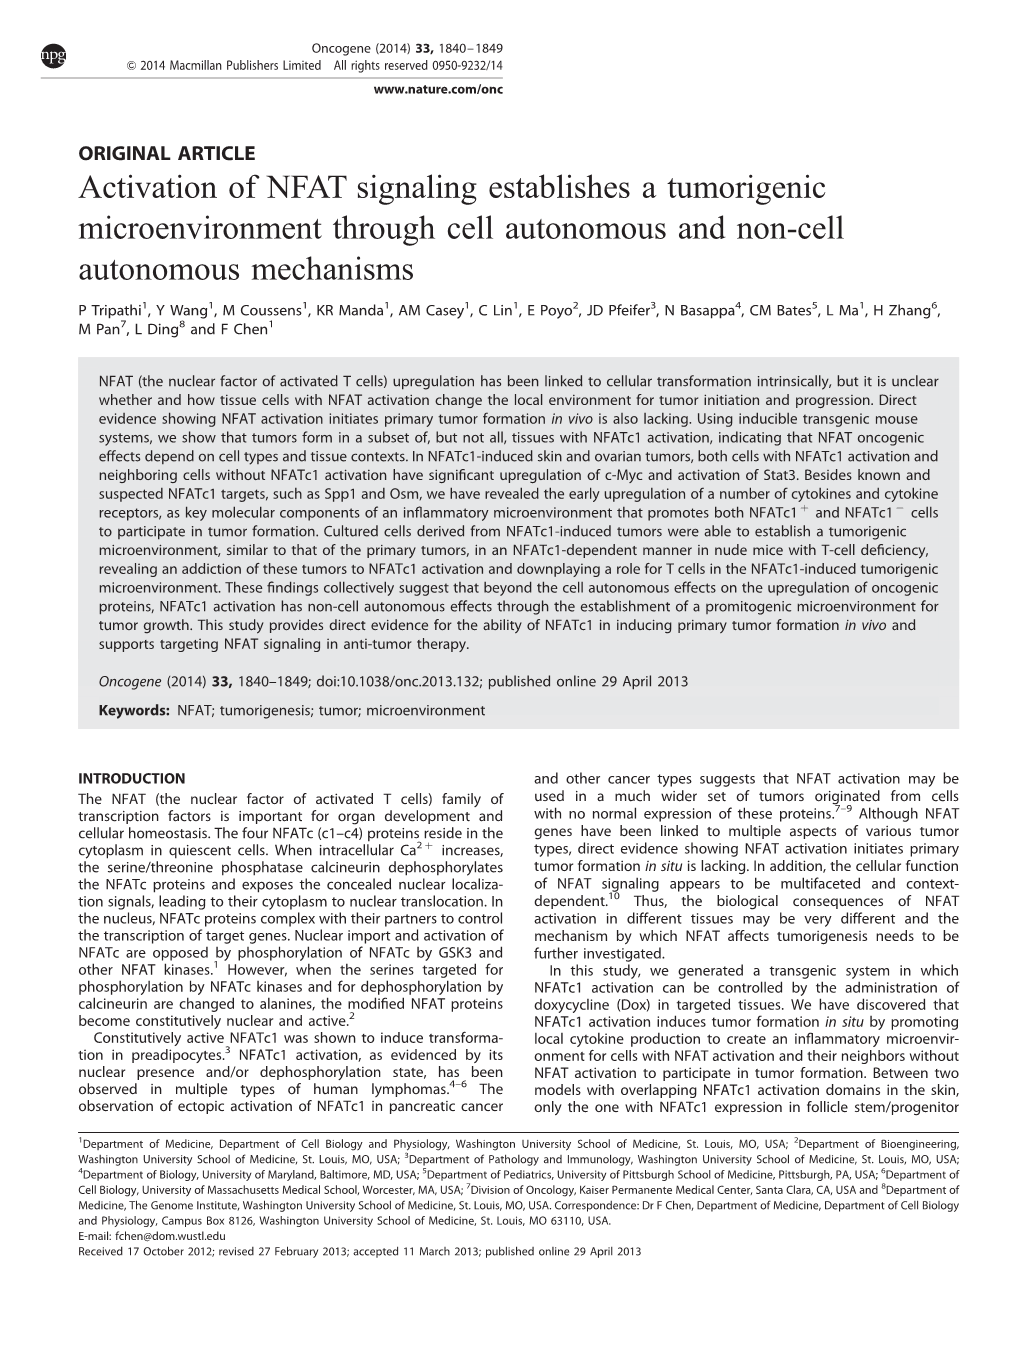 Activation of NFAT Signaling Establishes a Tumorigenic Microenvironment Through Cell Autonomous and Non-Cell Autonomous Mechanisms